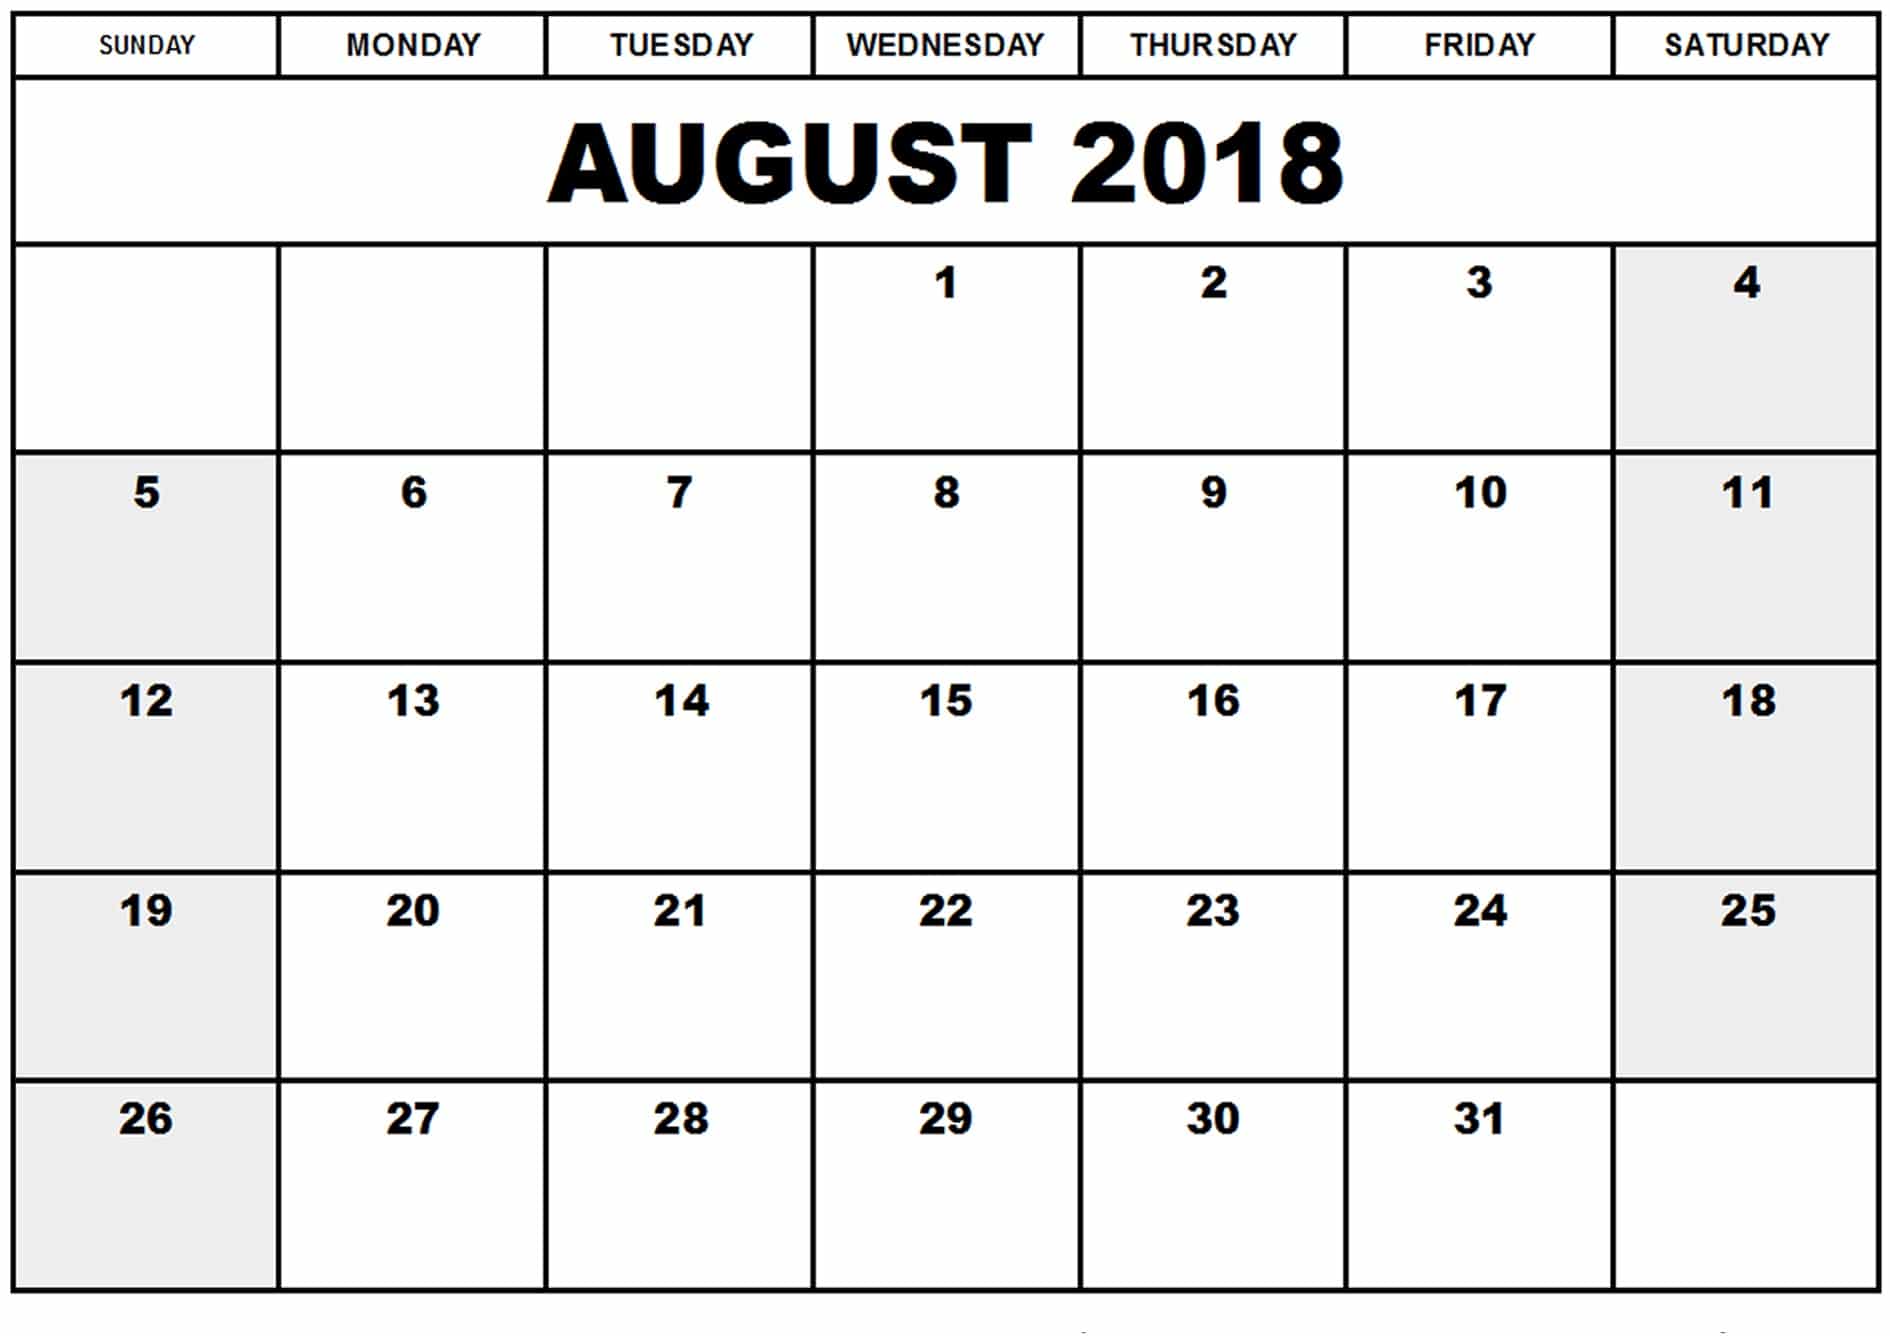 August 2018 Monthly Calendar